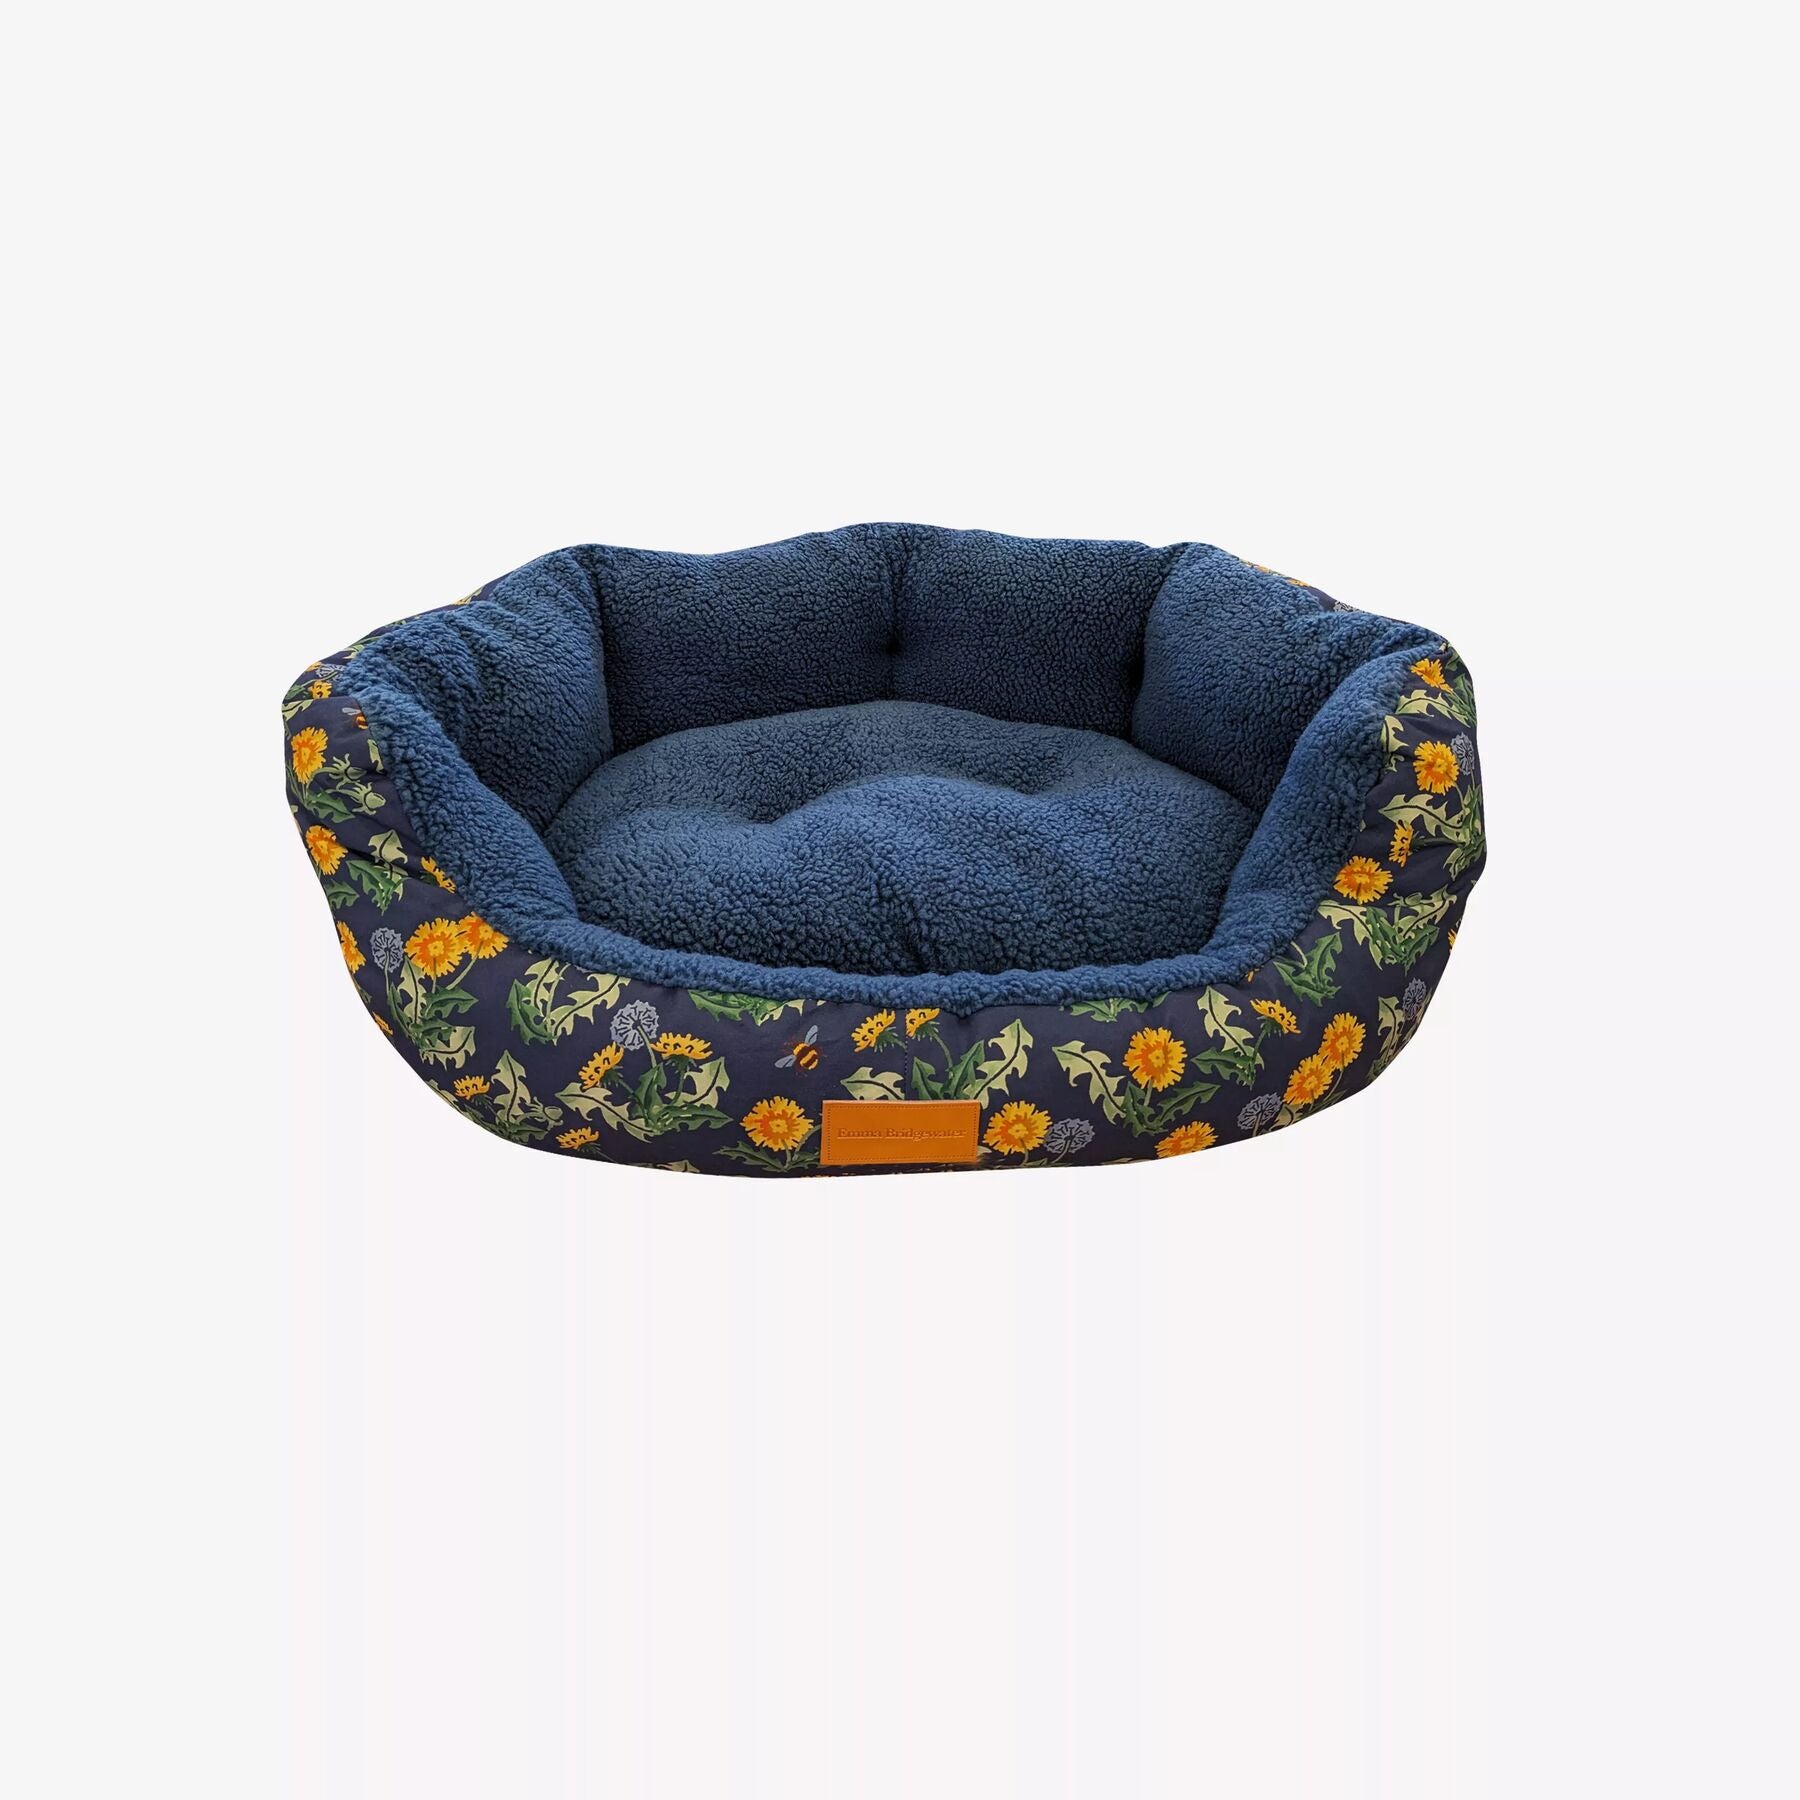 Emma Bridgewater |  Dandelion Waterproof Waxed Cotton Medium Pet Bed